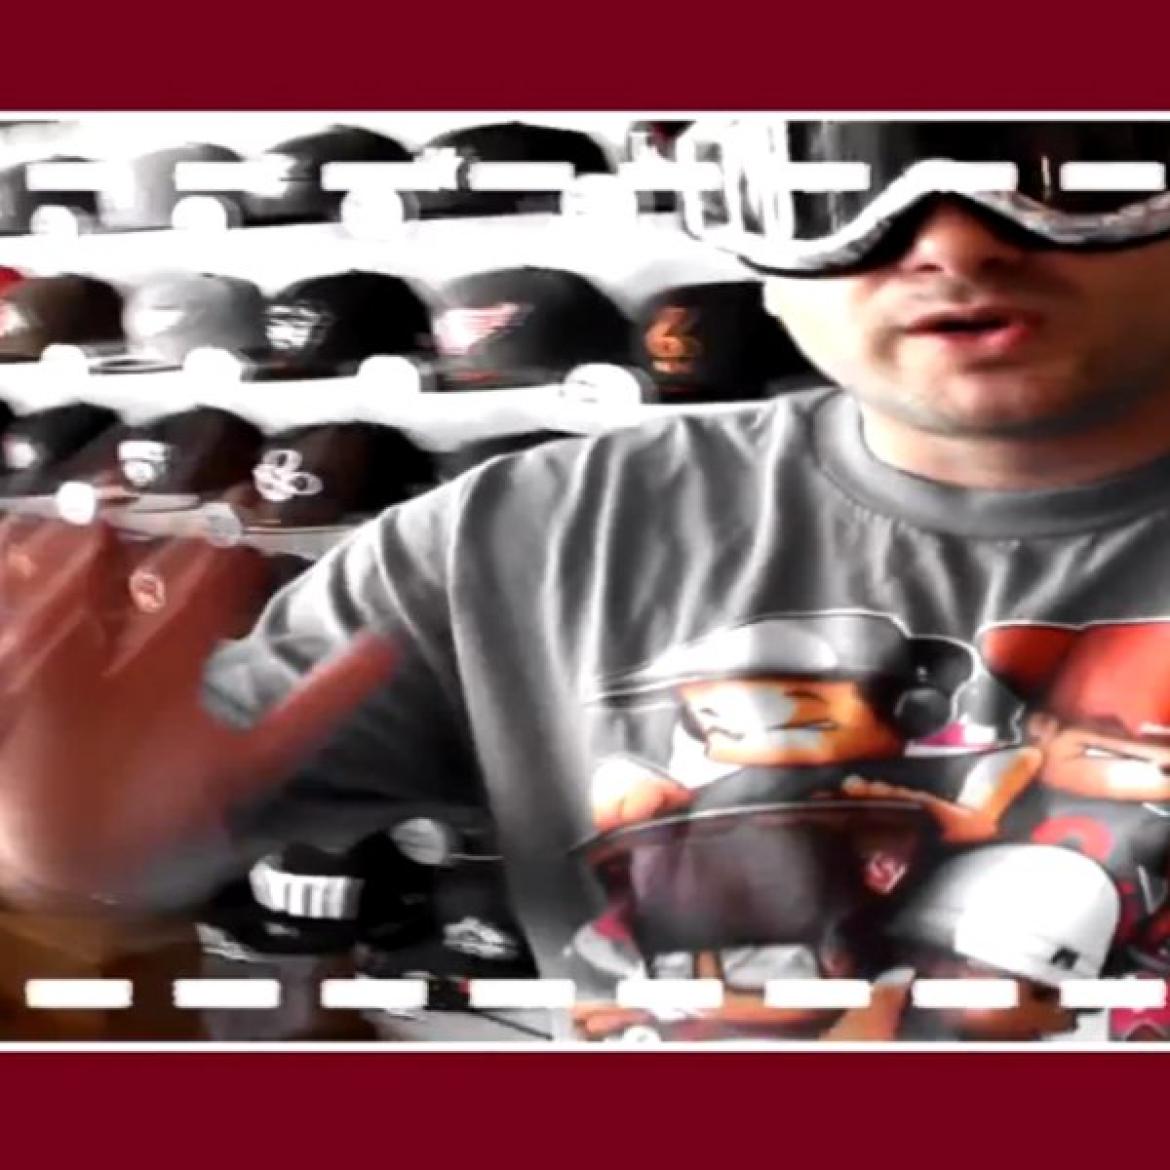 Kool Bboy Fresh MC - New Era Cap Rap (Exclusive Video)